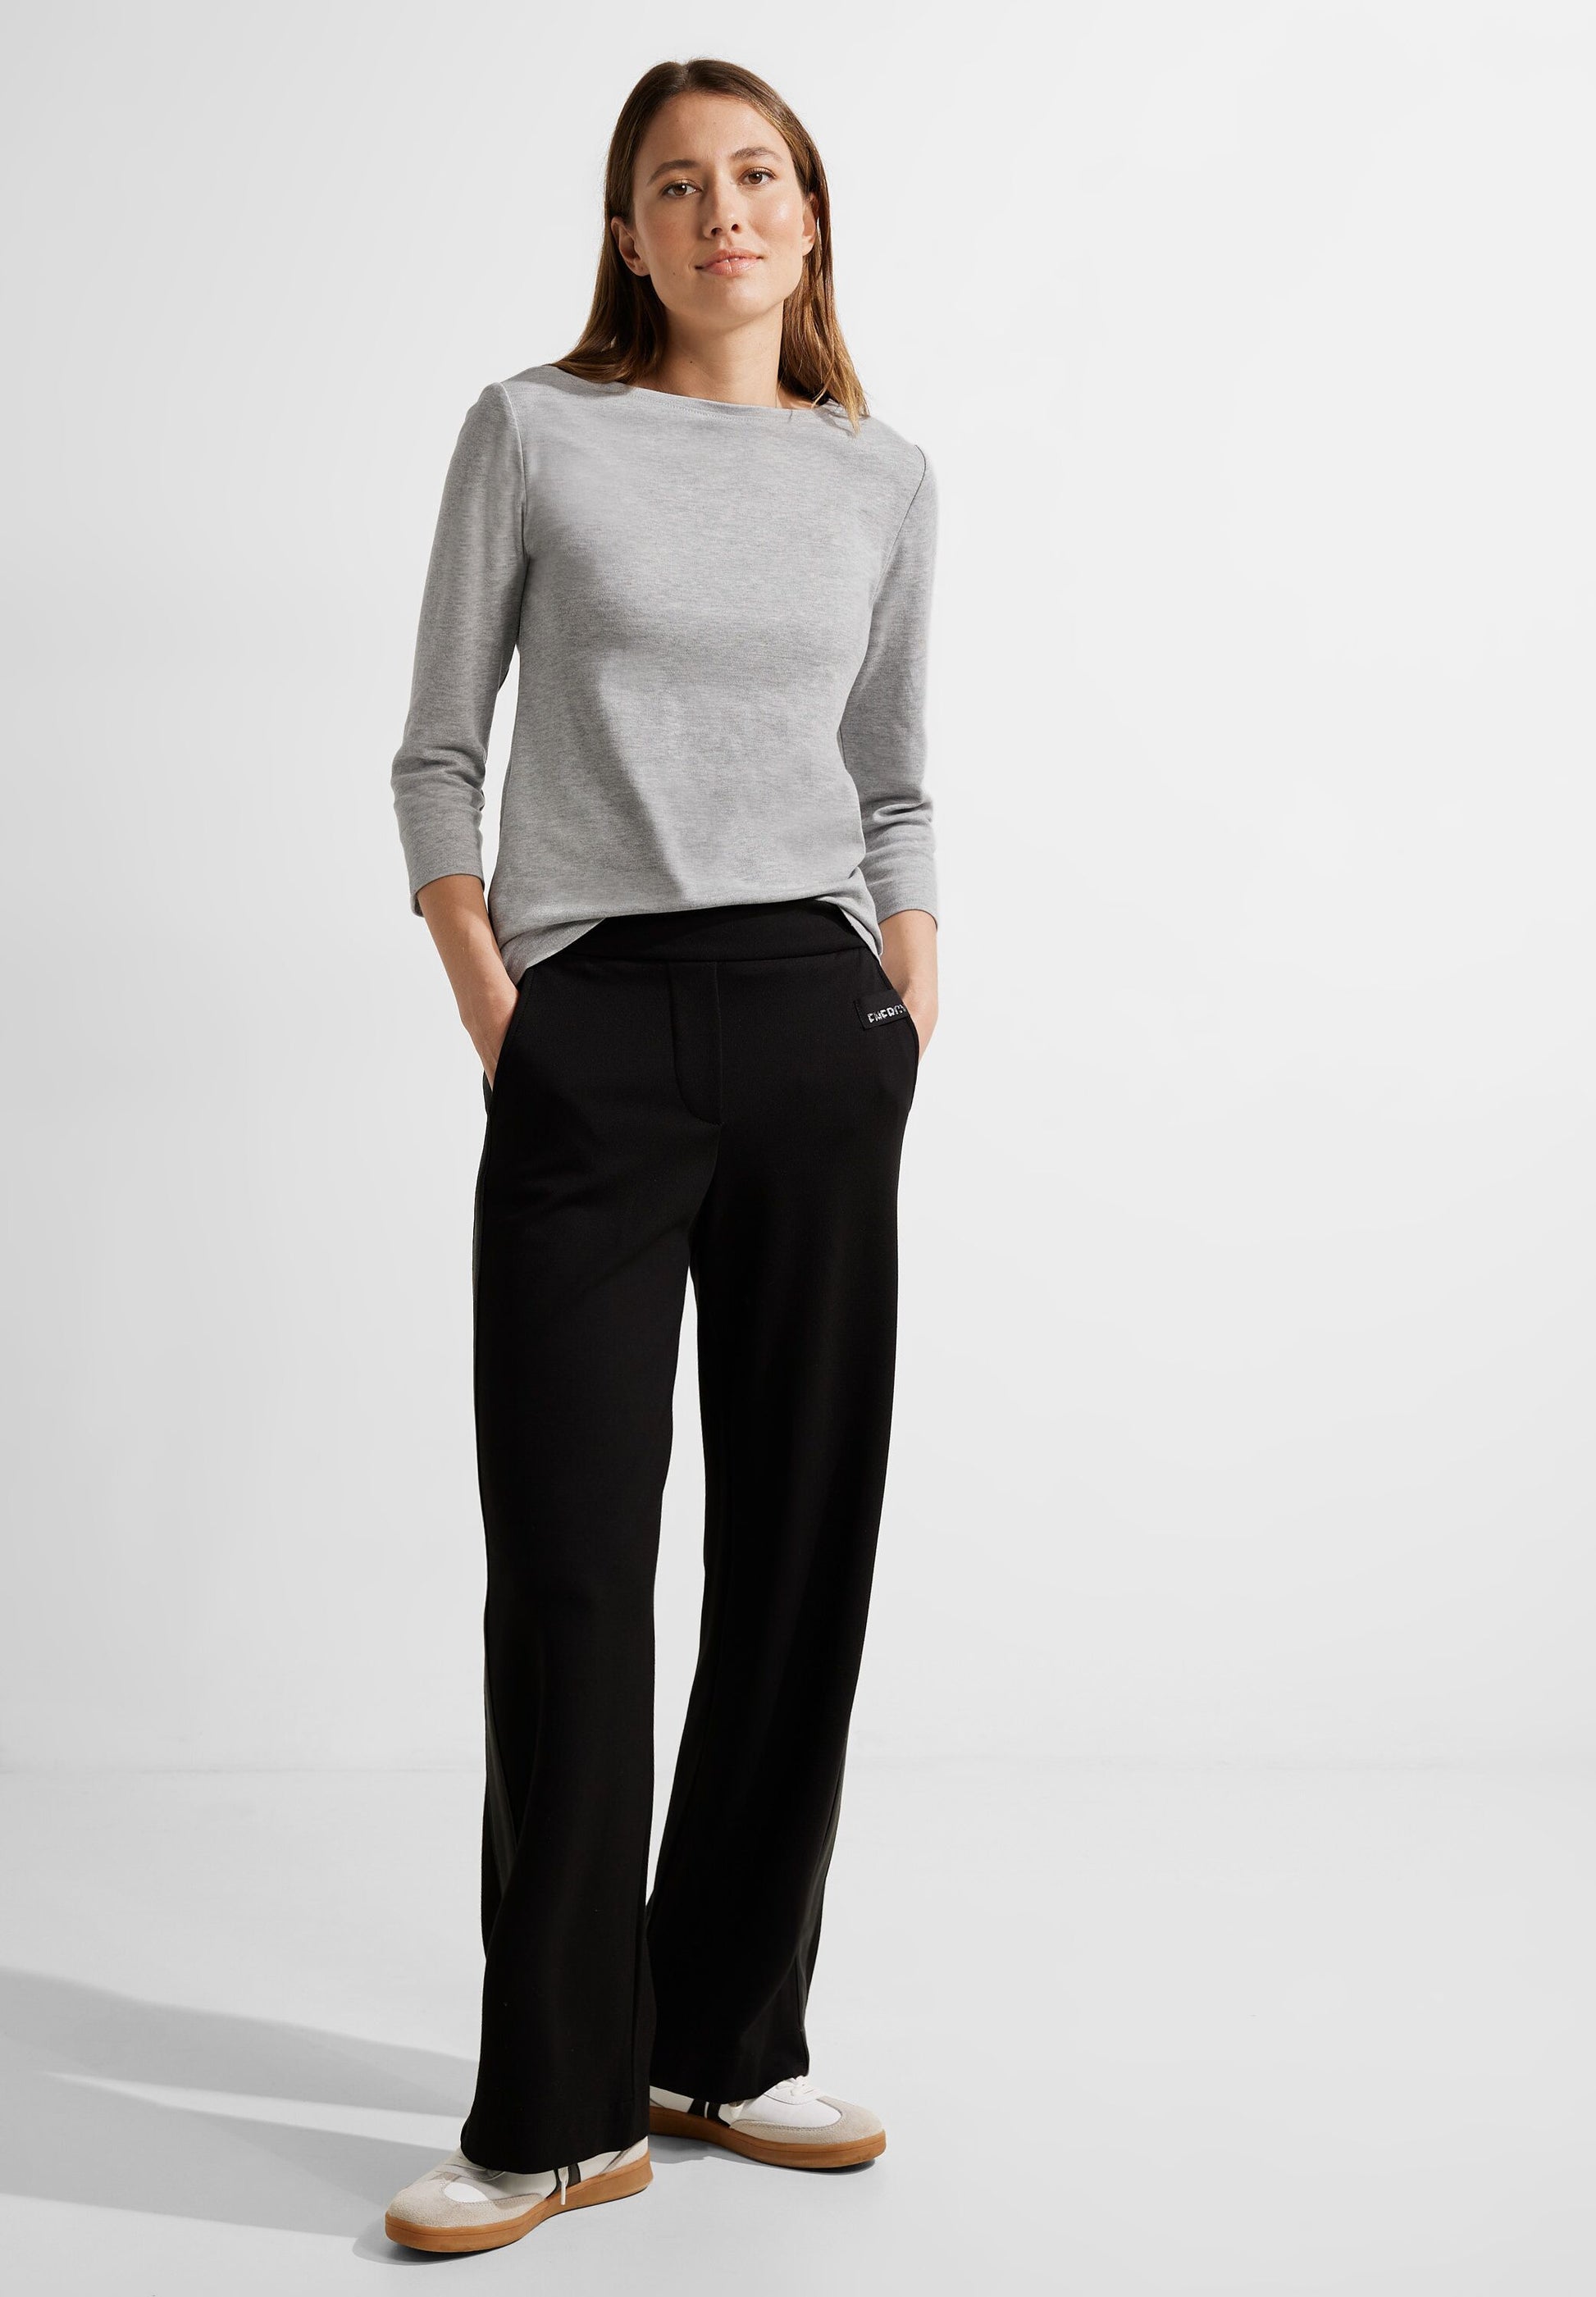 CECIL - TWISTY - Unifarbe Basic grey Shirt – Mode in Farbe: melange